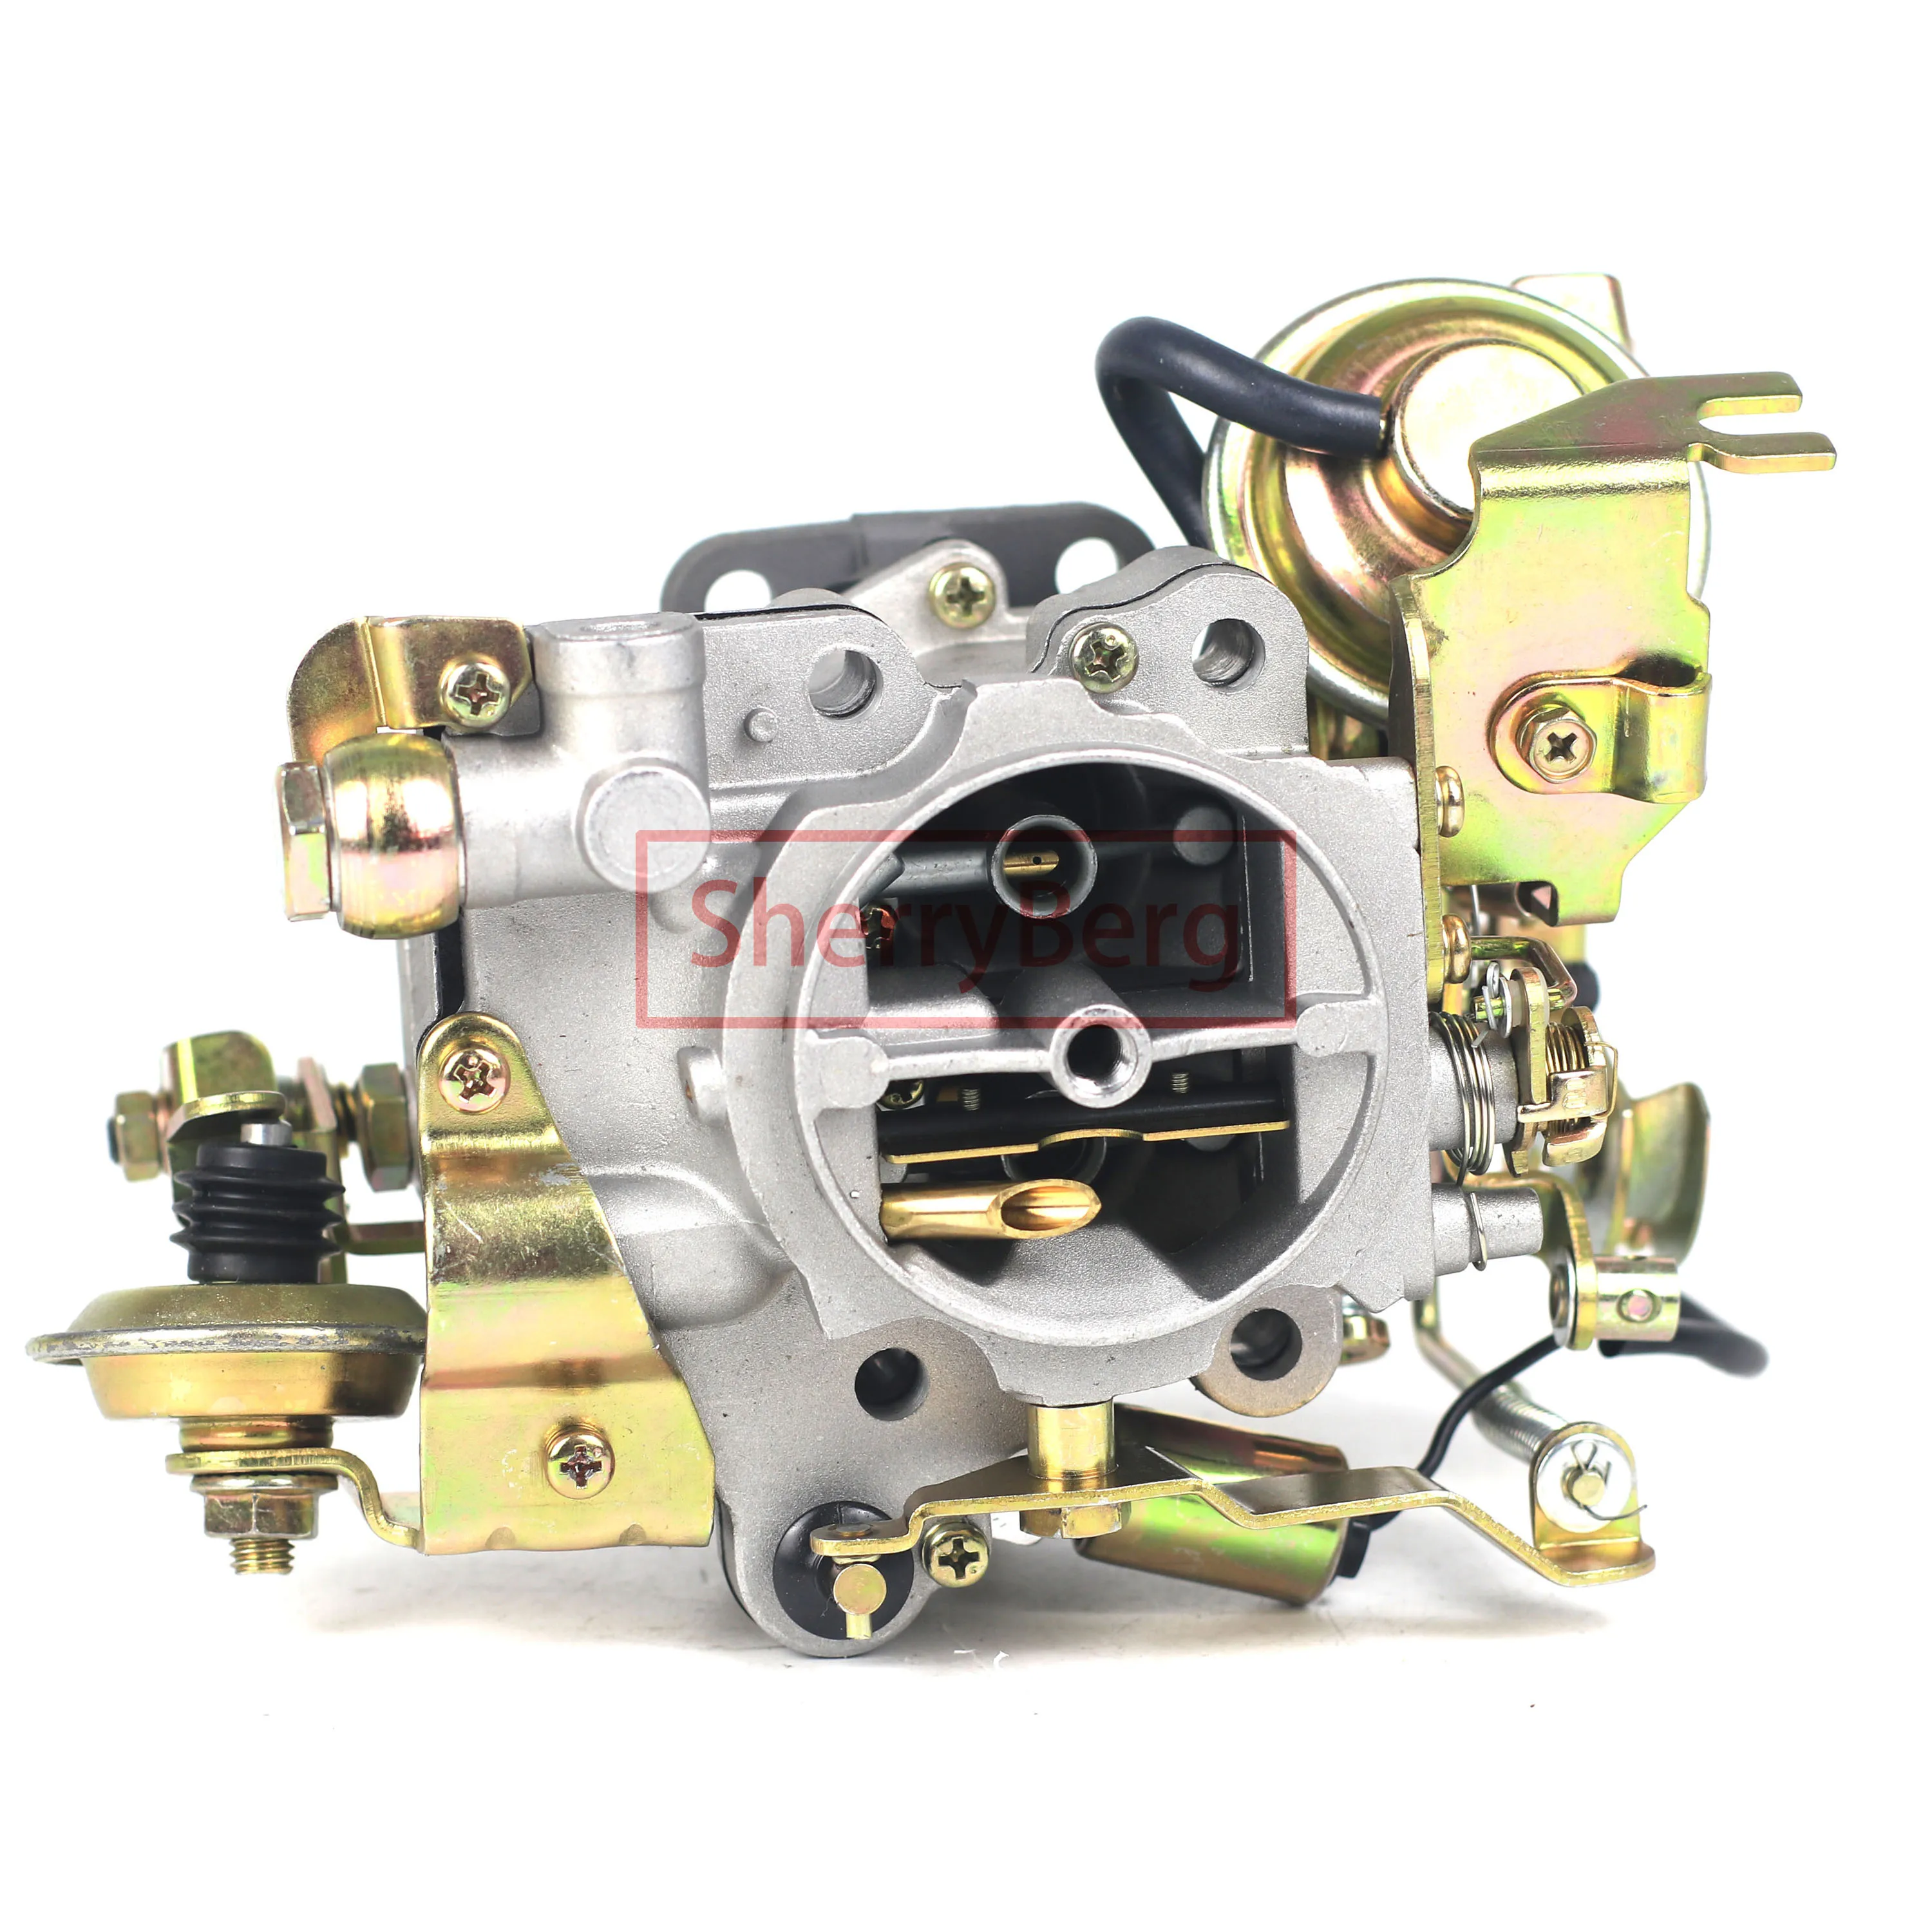 

Carburetor carbuetor carb Fit for Mitsubishi 4G63 L300/Galant/TALON/FREECA/Eclipse/SPACE GEAR